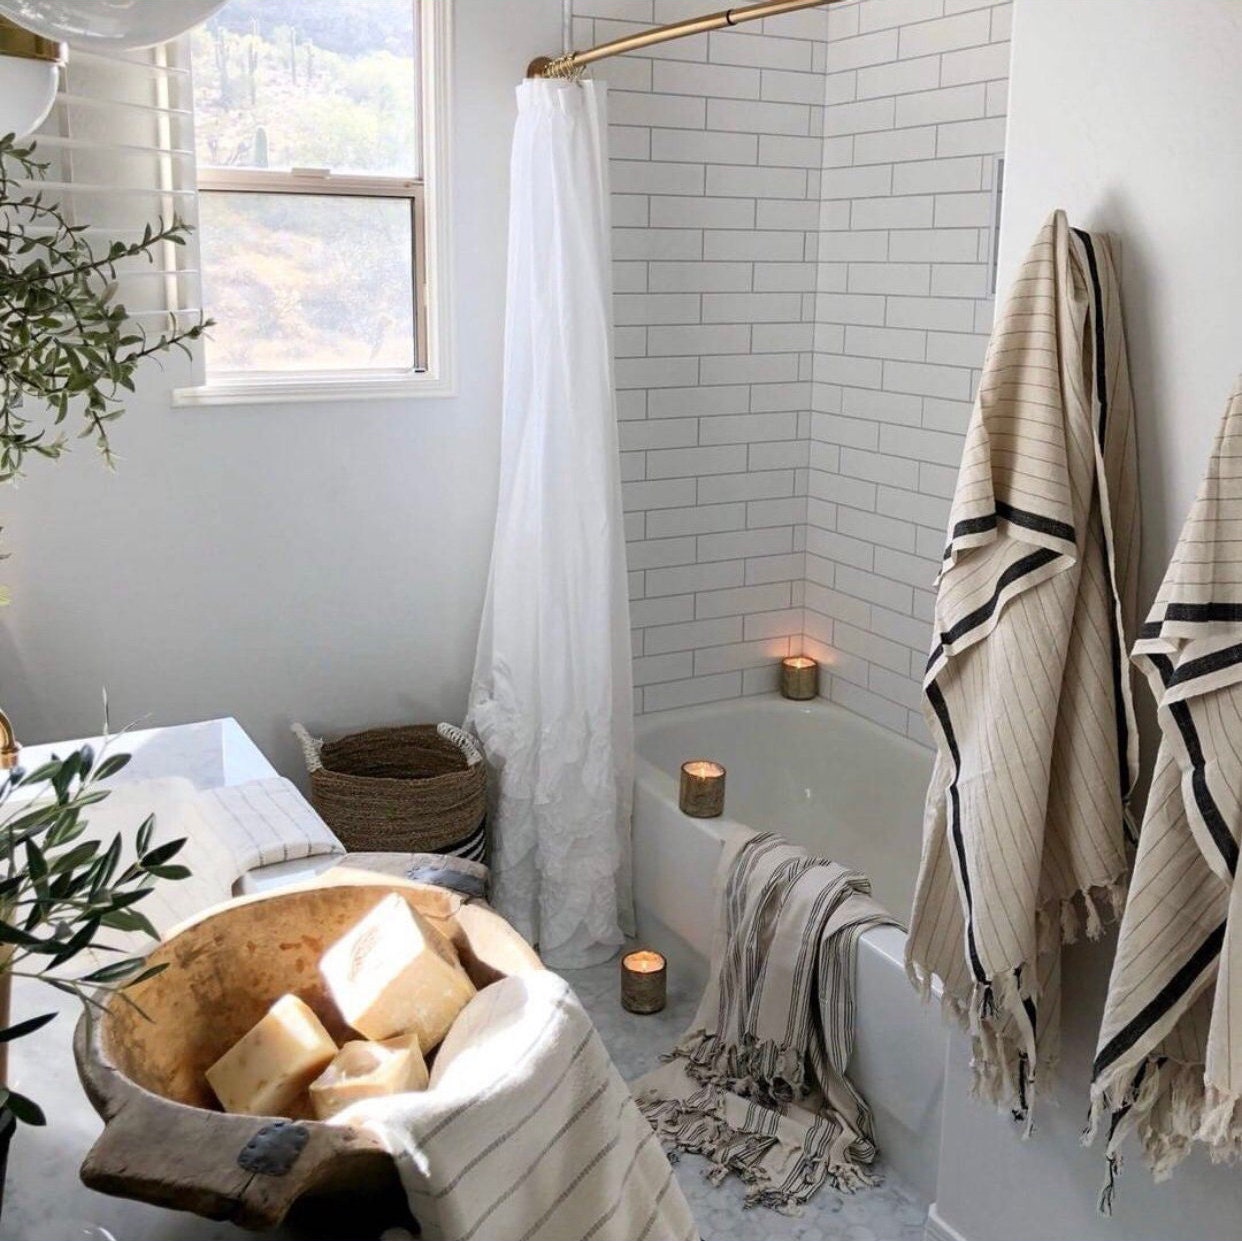 Silvia Luxurious Turkish Bath Towel Rustic Farmhouse Home Decor 100%  Turkish Cotton Towel Large Towel 